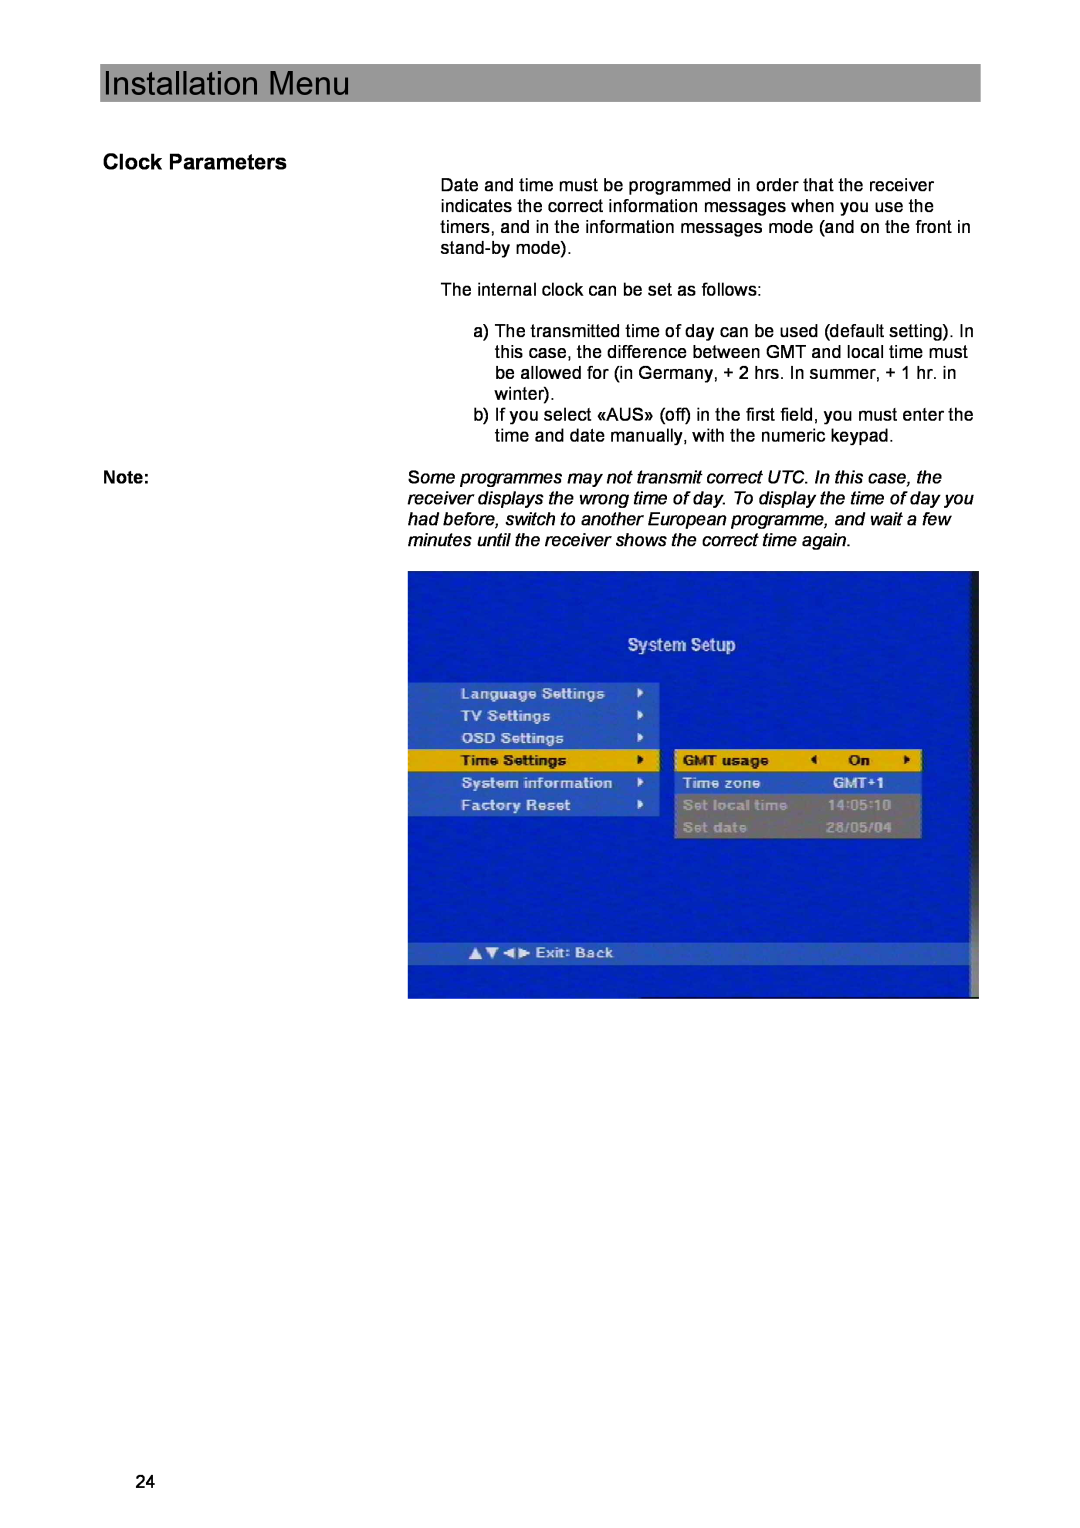 Kathrein UFE 371/S manual Clock Parameters, Installation Menu 